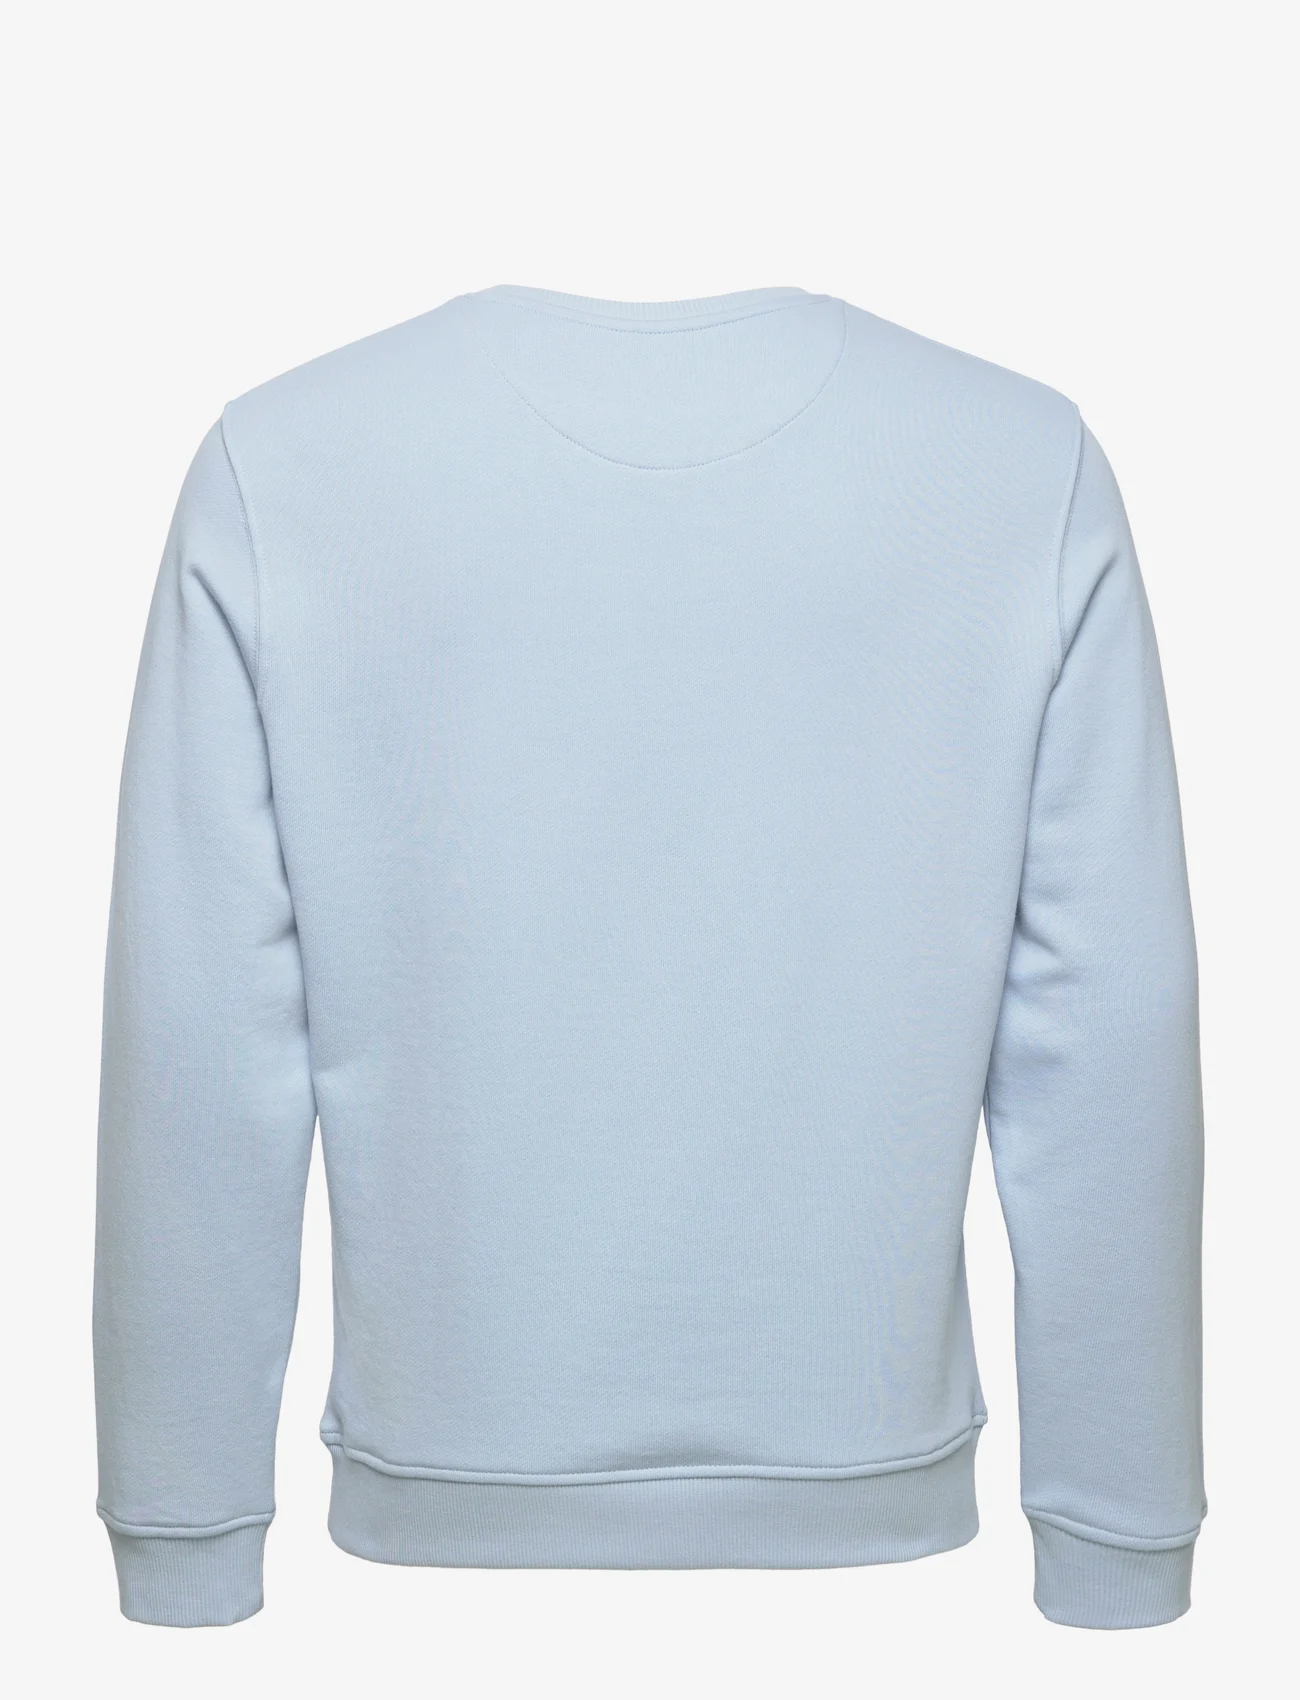 Lyle & Scott - Crew Neck Sweatshirt - swetry - light blue - 1